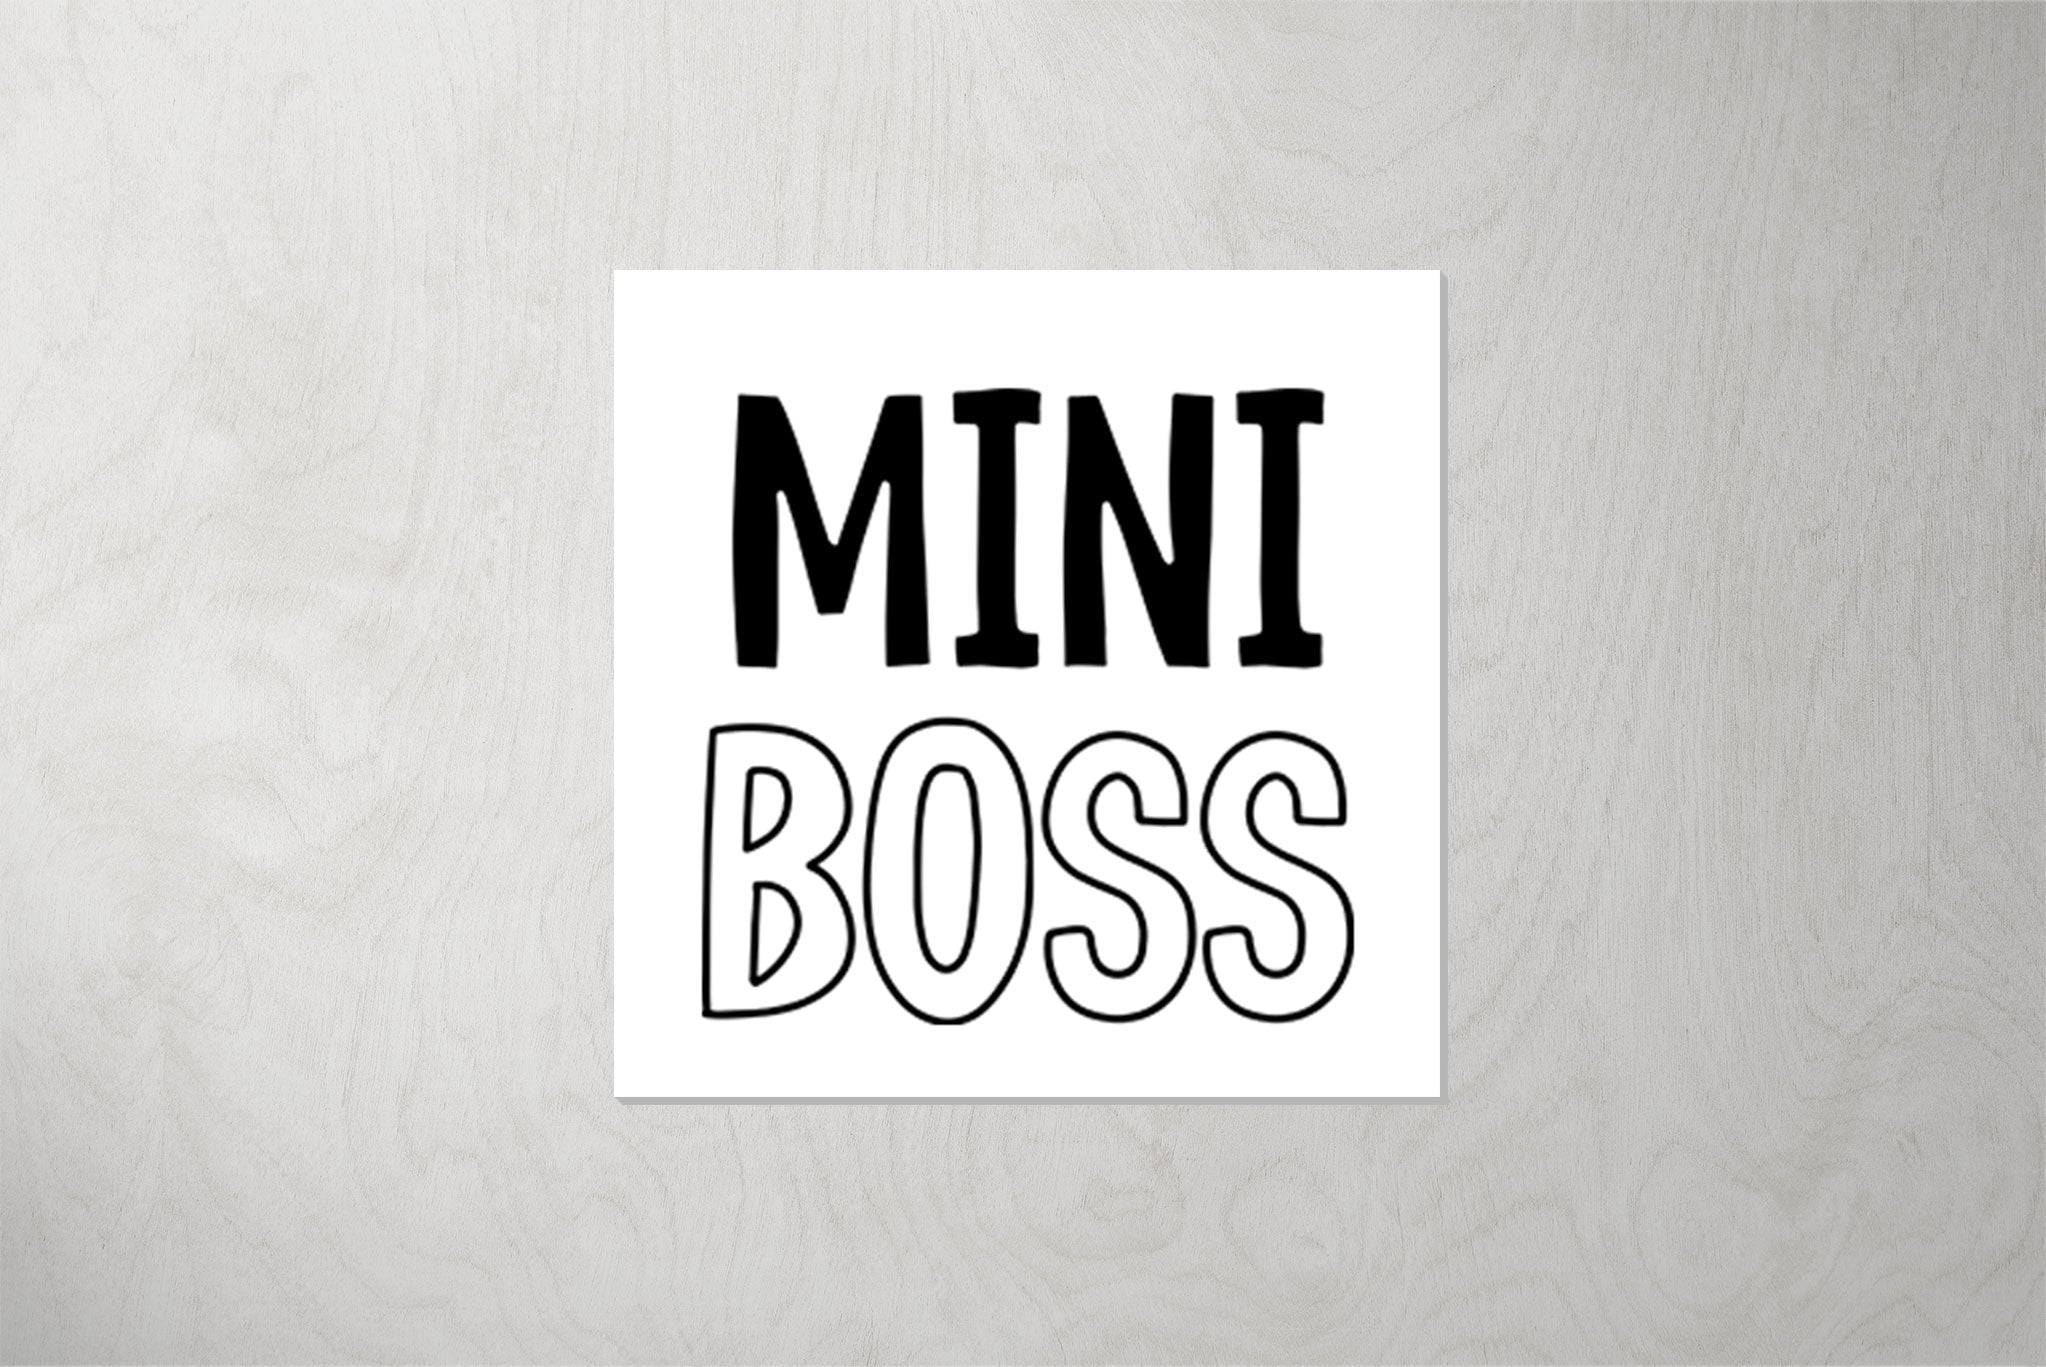 Kunstleder Patch "Mini Boss" weiß 3,5 x 3,5 cm